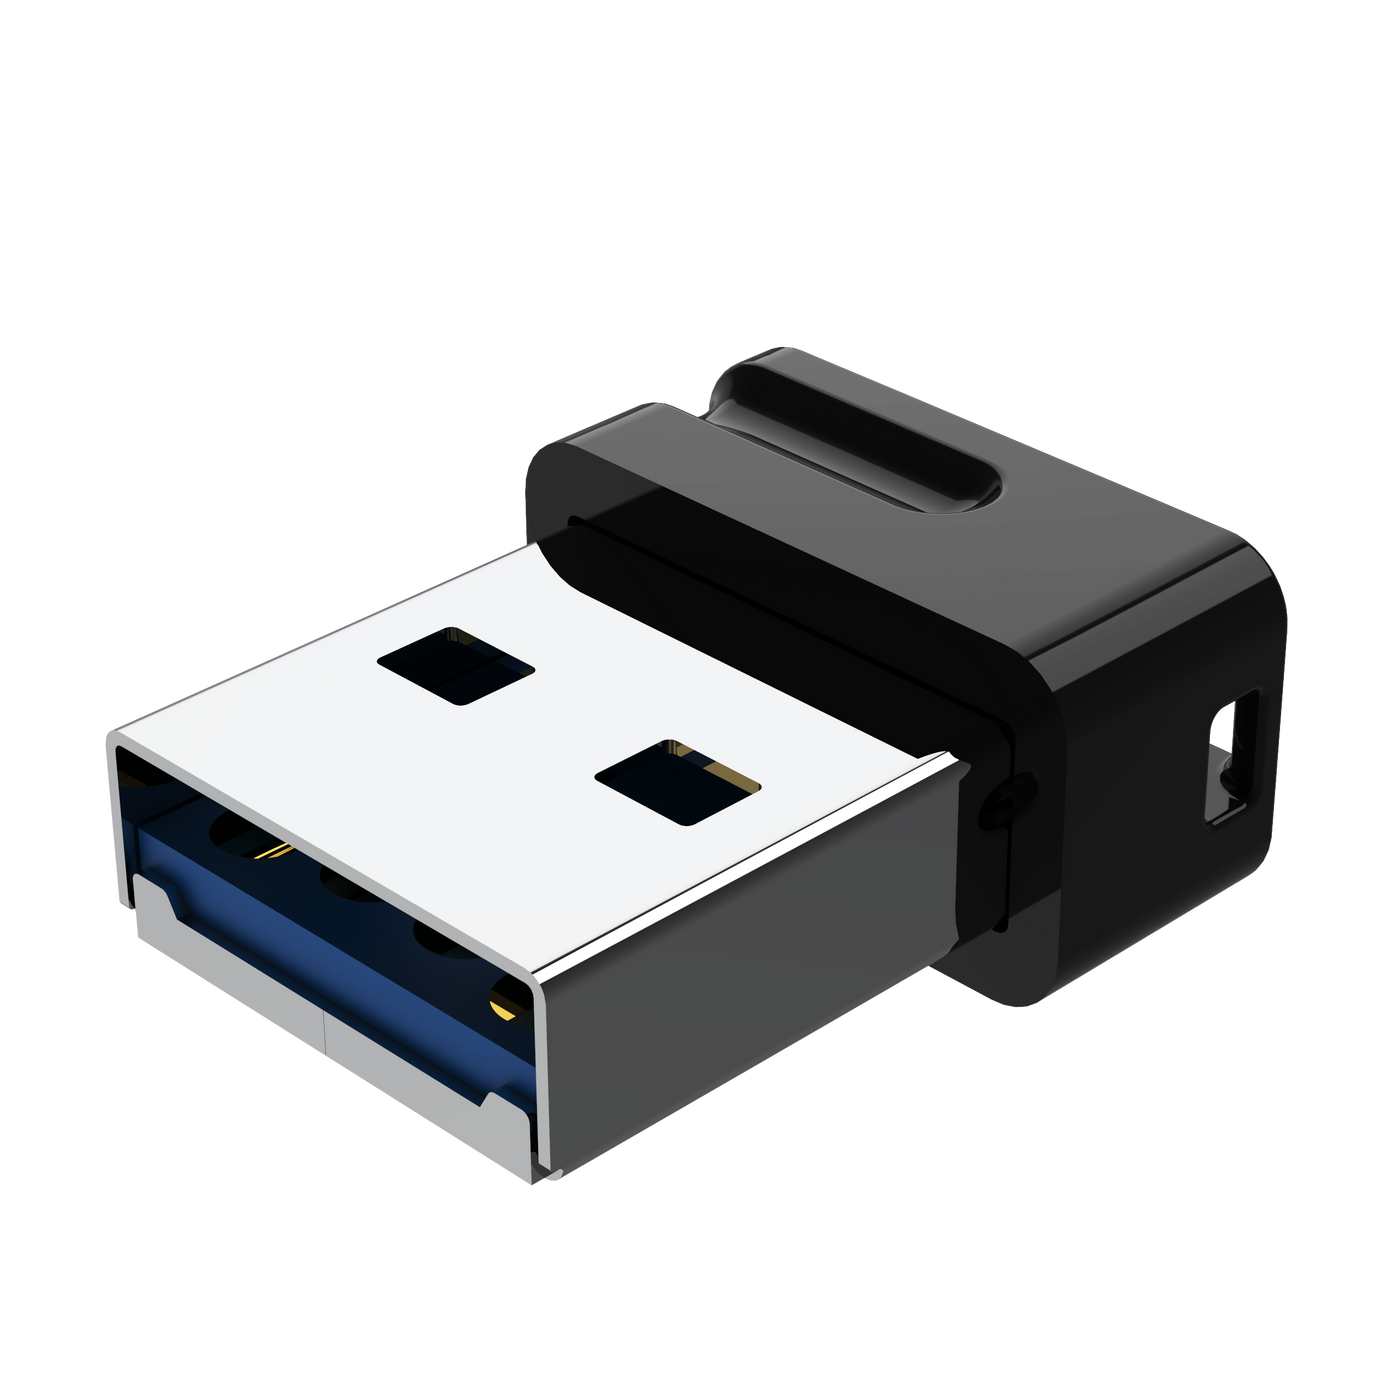 MAGIX DataPixie USB Flash Drive 3.0